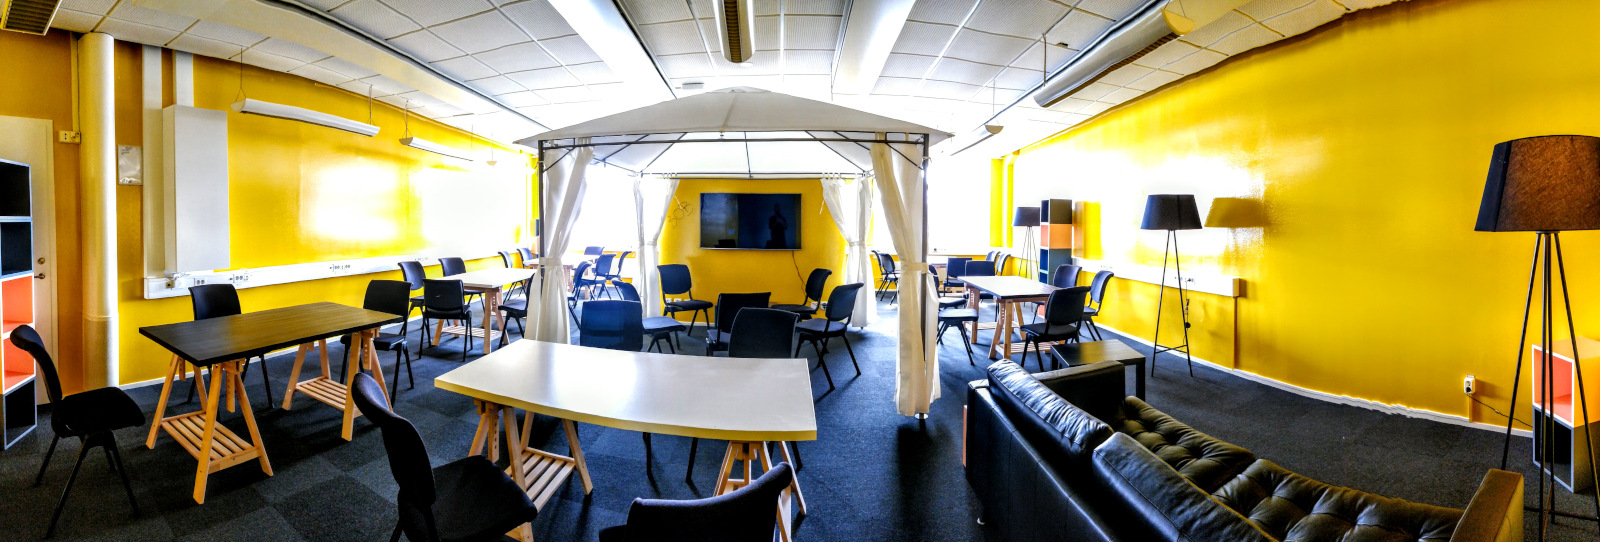 Yellow Room in Mar 2018, Biglee, Jönköping International Business School